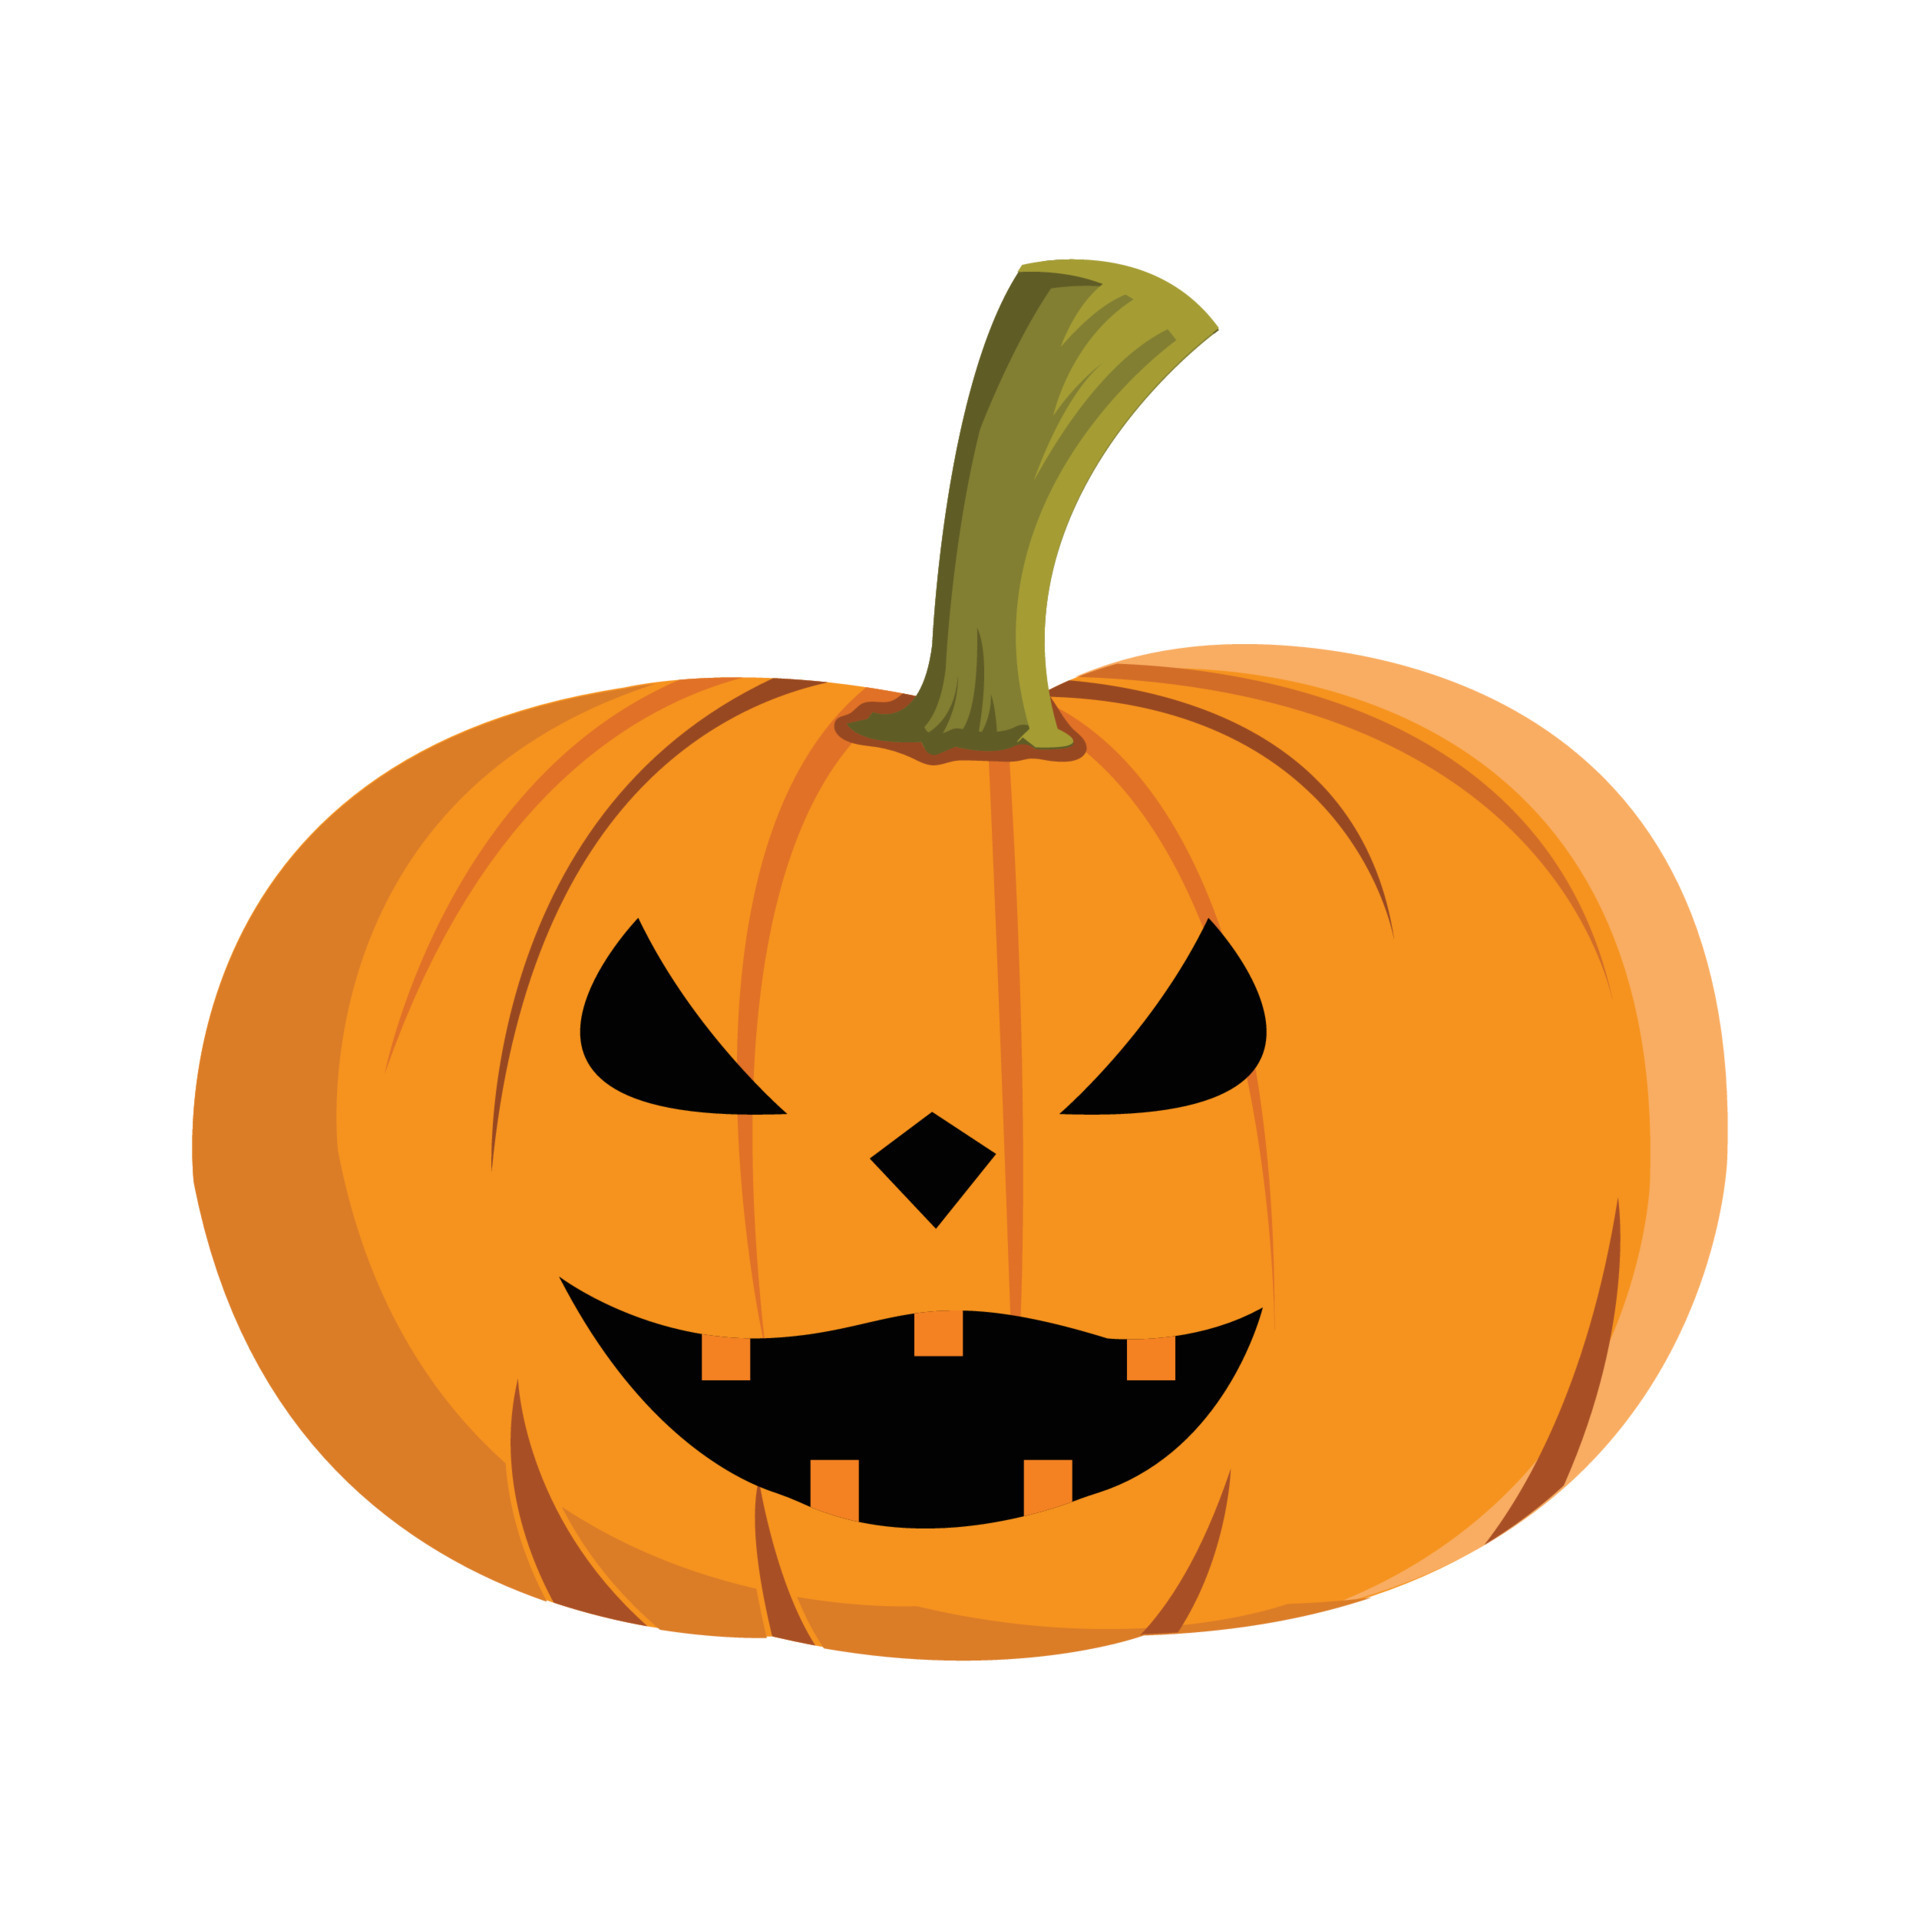 Halloween pumpkin lantern design with orange and green color. Pumpkin  lantern design with a spooky face on a white background for Halloween.  Costume element design with pumpkin. 8017695 Vector Art at Vecteezy